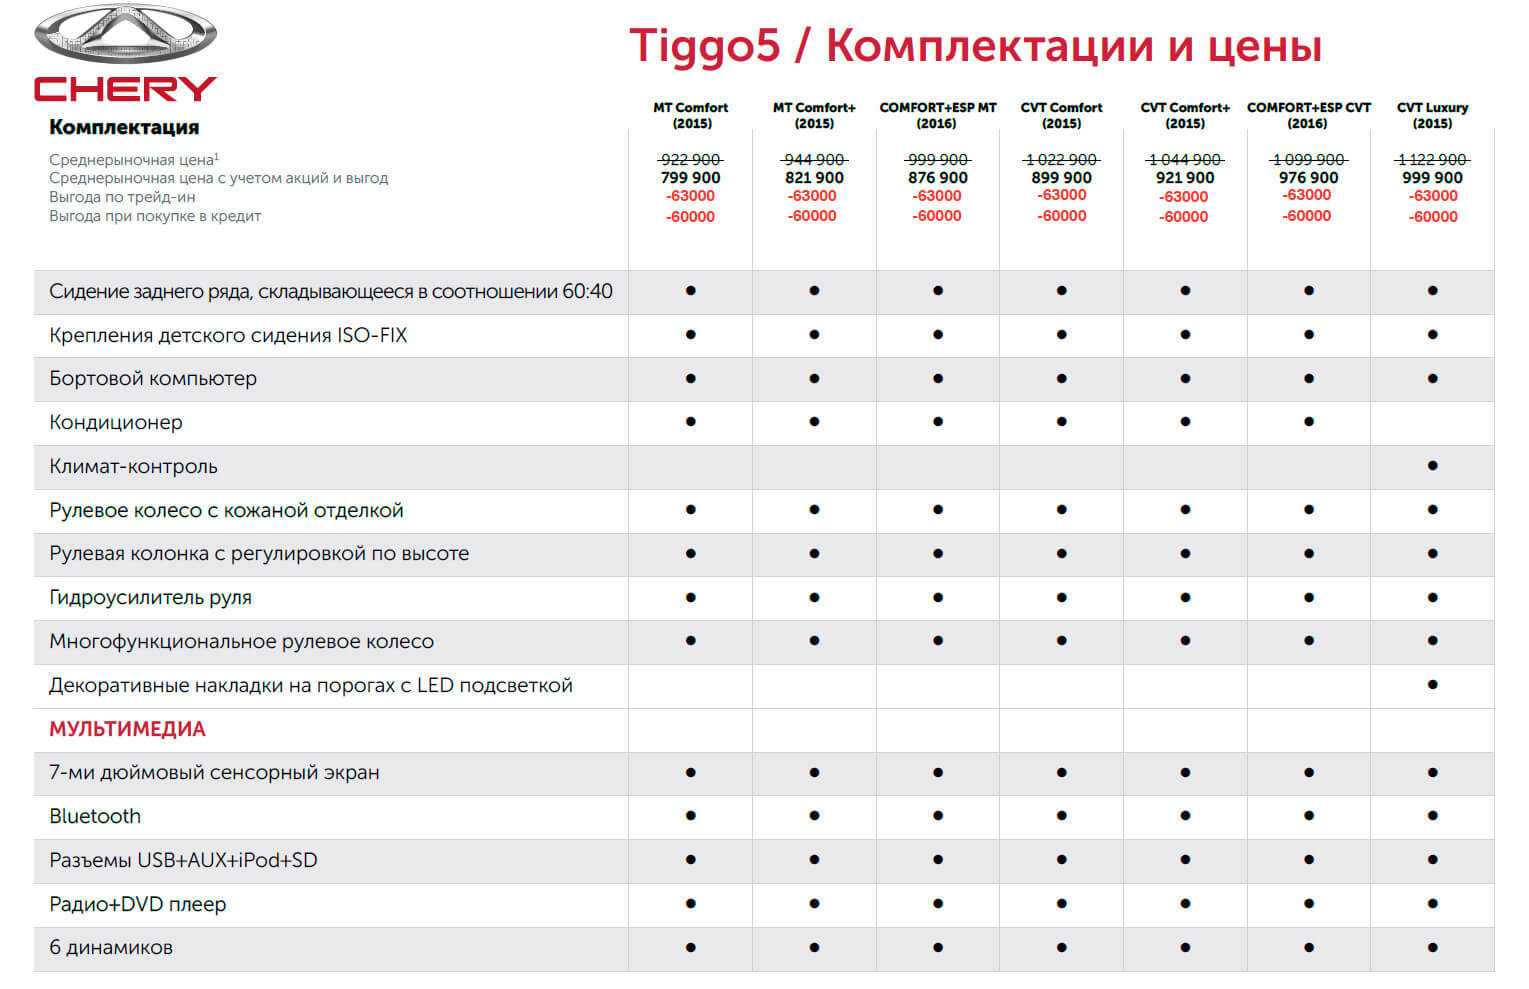 Chery tiggo 2 – характеристики, комплектации и цены, обзор suv | tiggovod